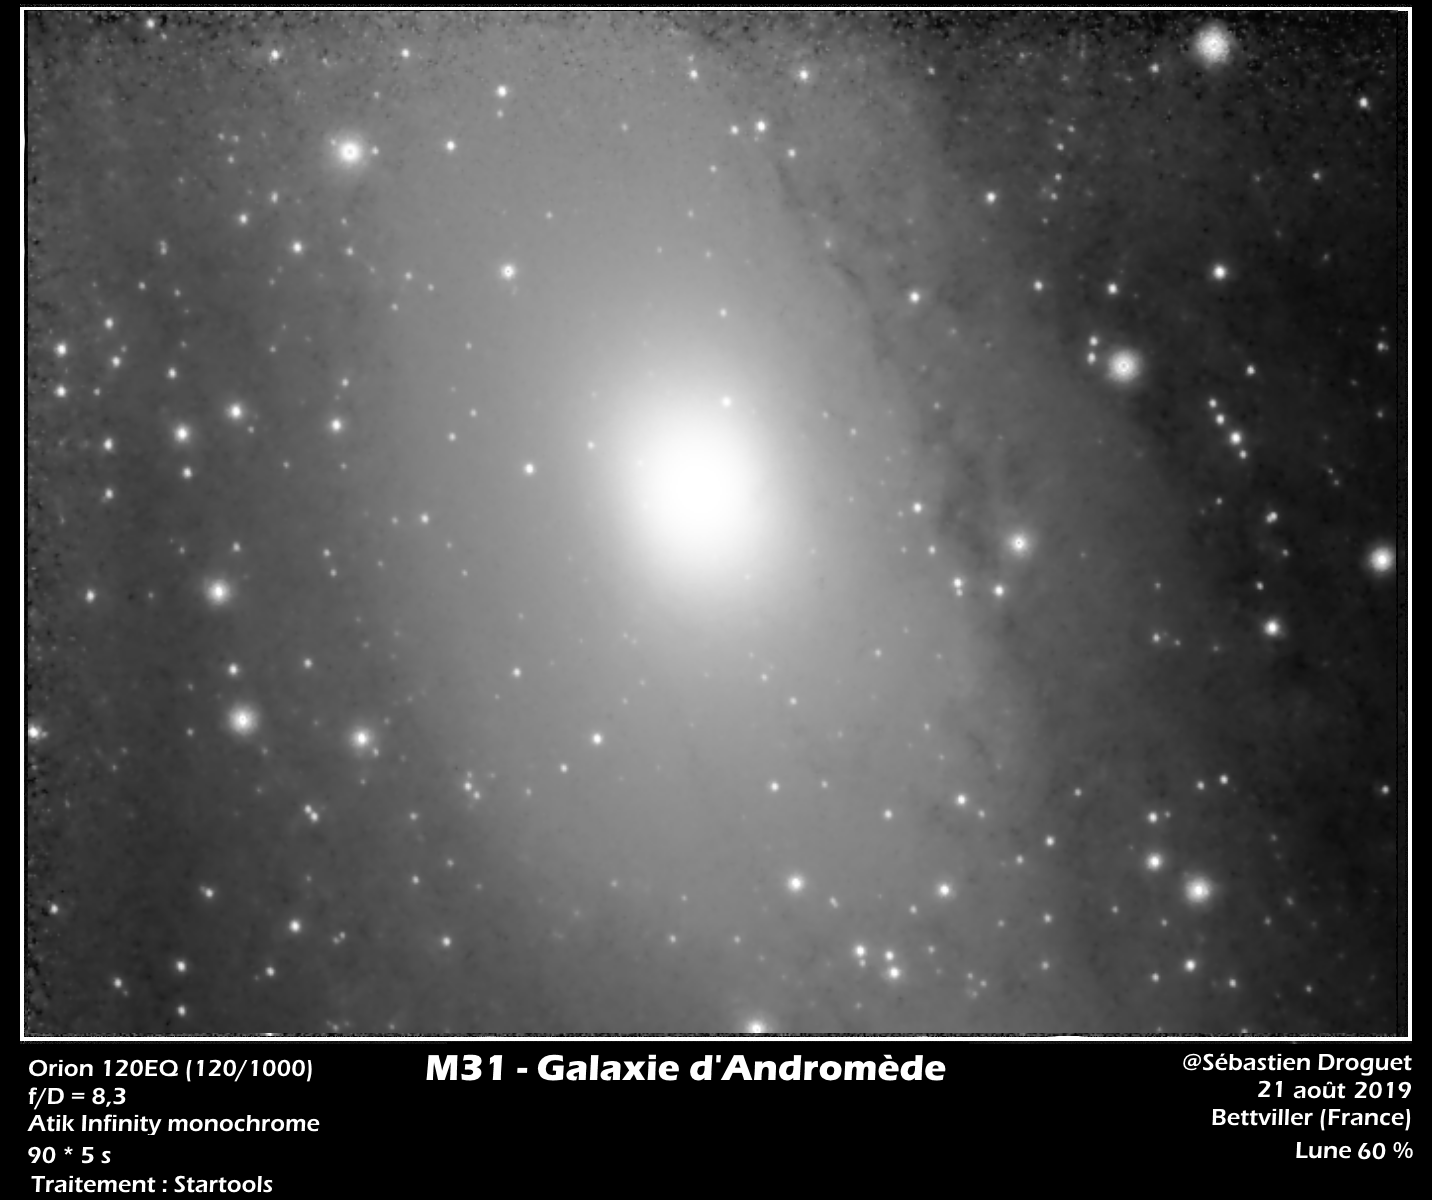 M31 (NGC 224) la galaxie d'Andromède